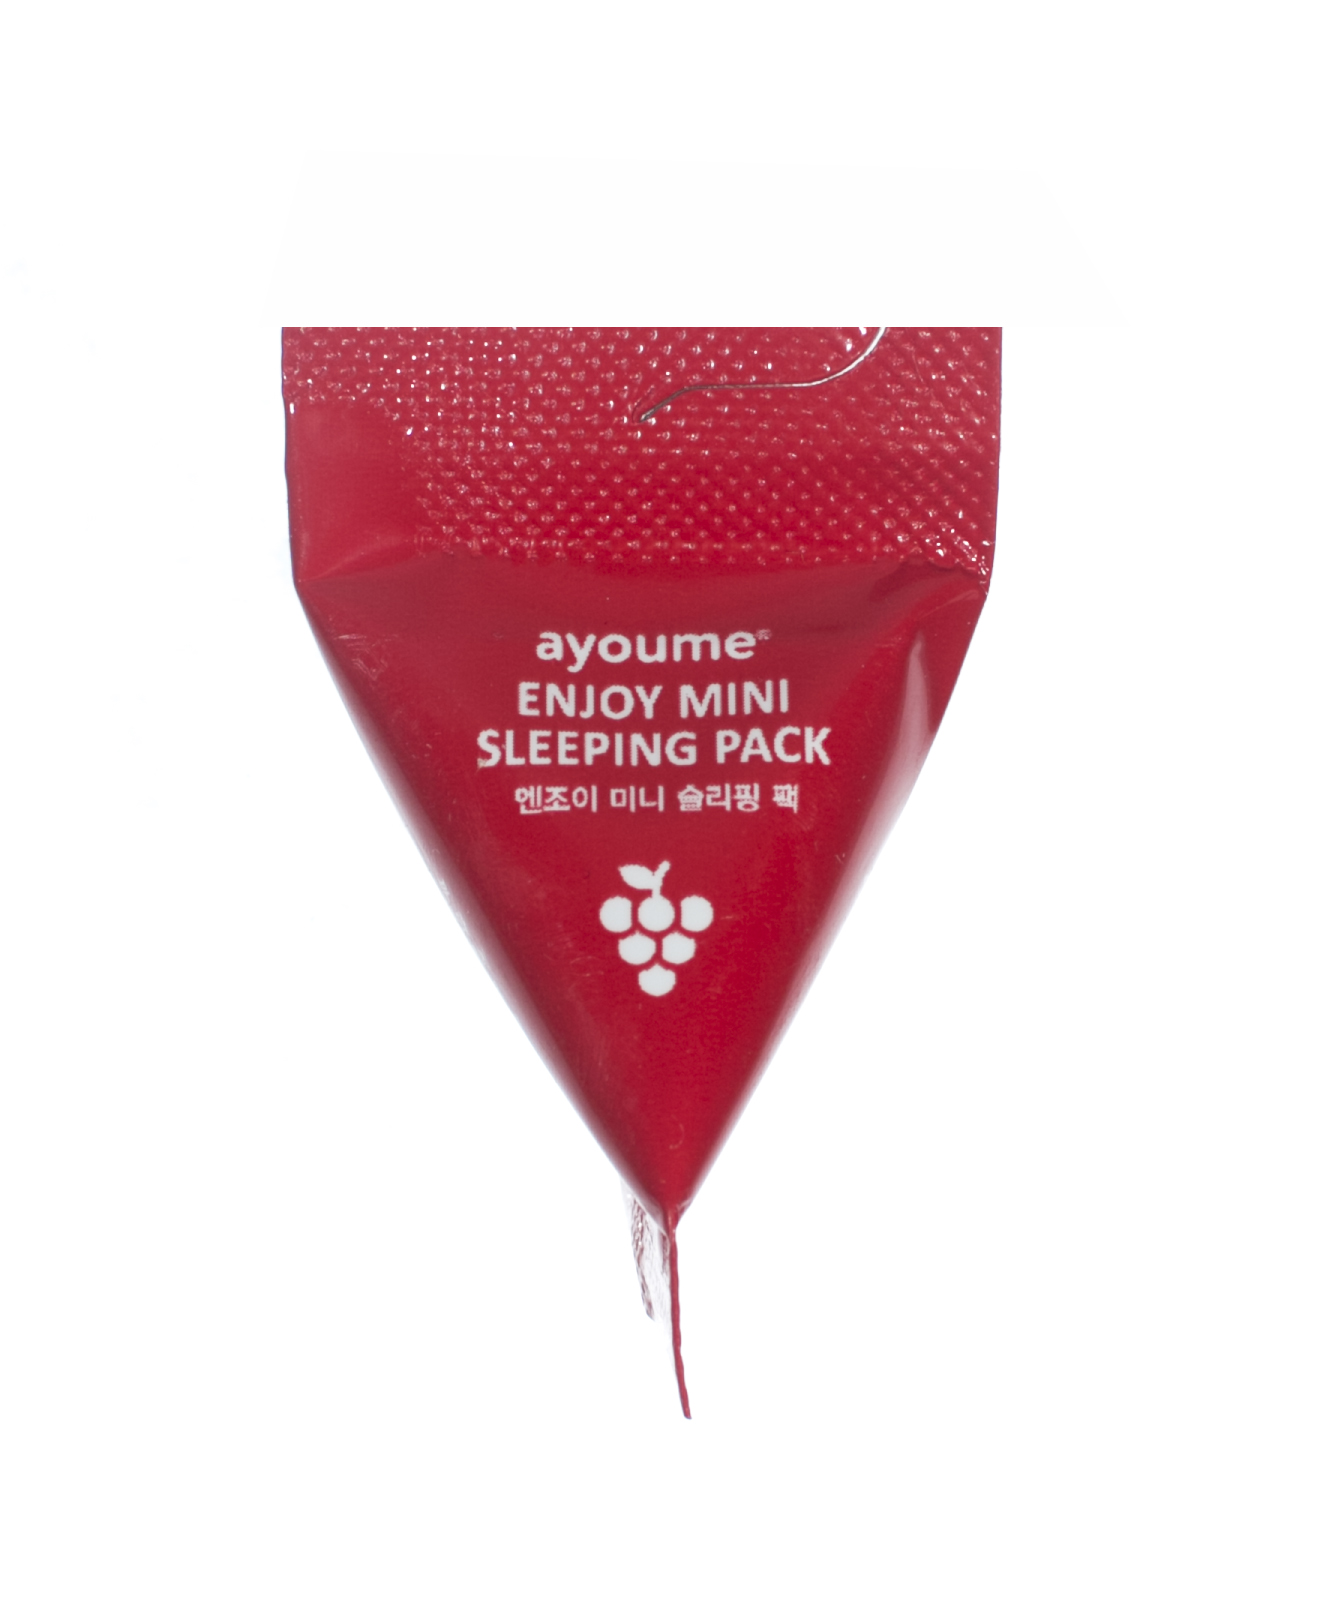 Ночная антивозрастная маска для лица Ayoume Enjoy Mini Sleeping Pack 1 шт. пирамидка балерина дега